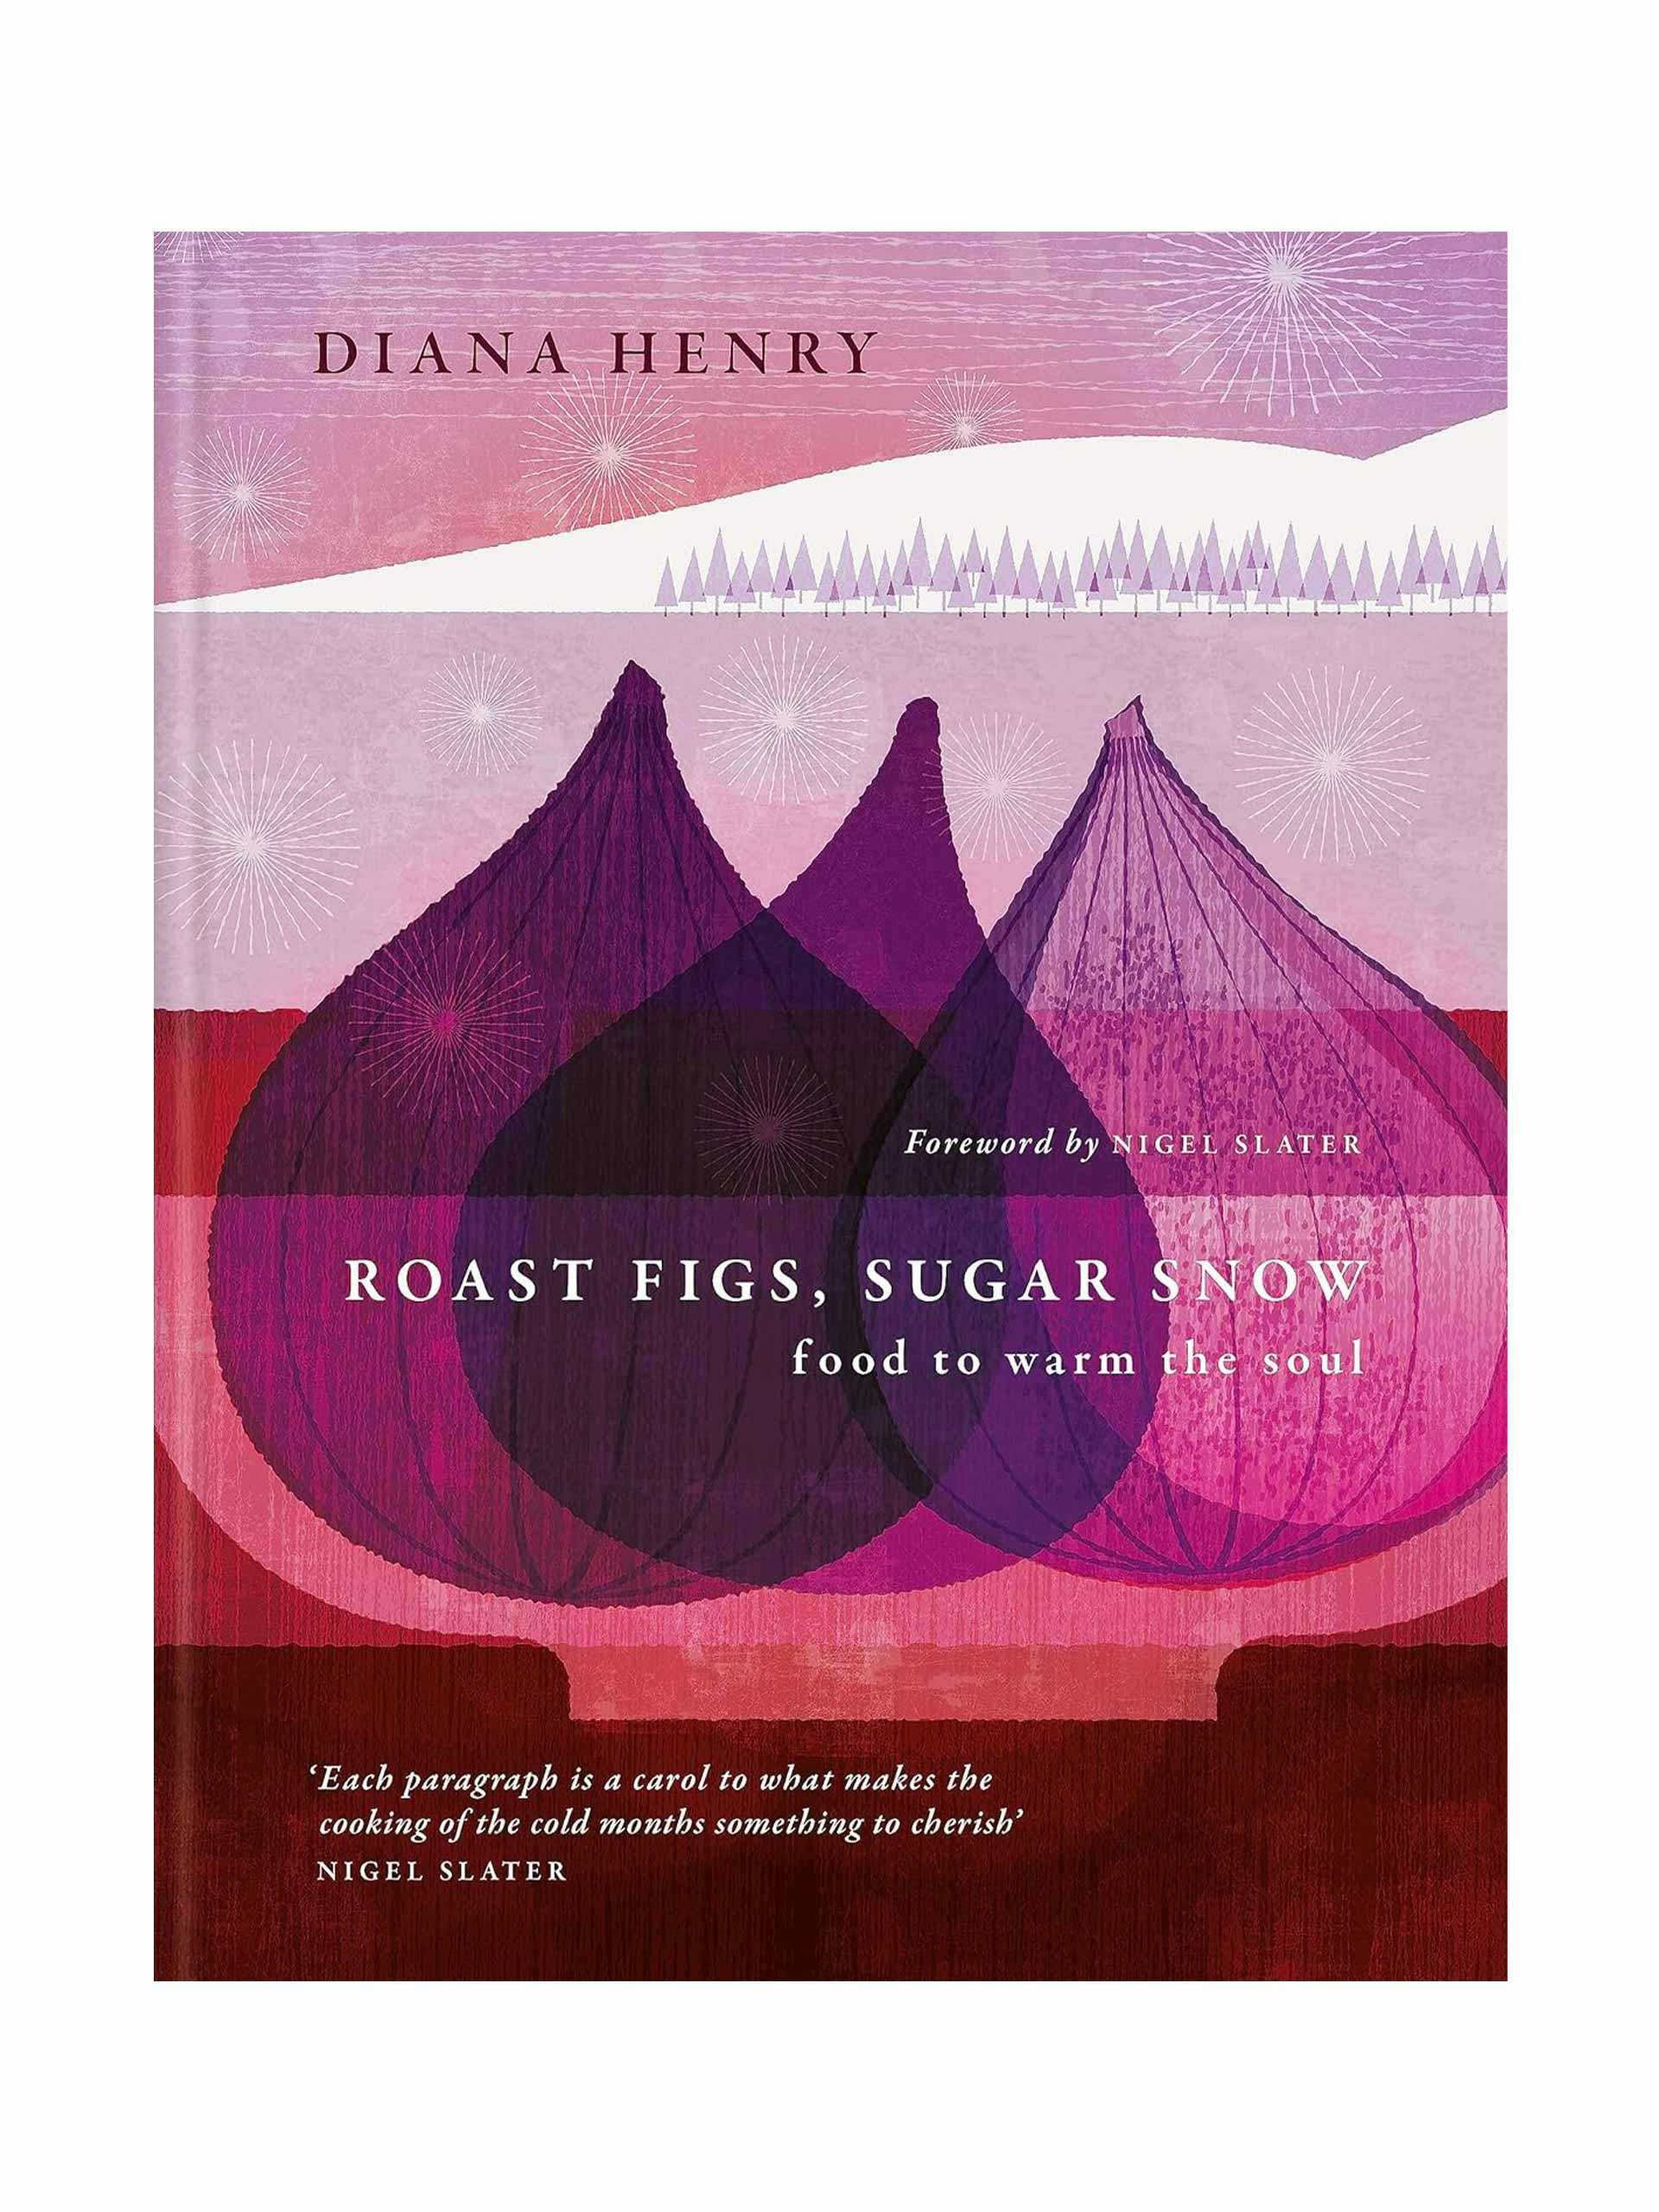 Roast figs, sugar snow: food to warm the soul